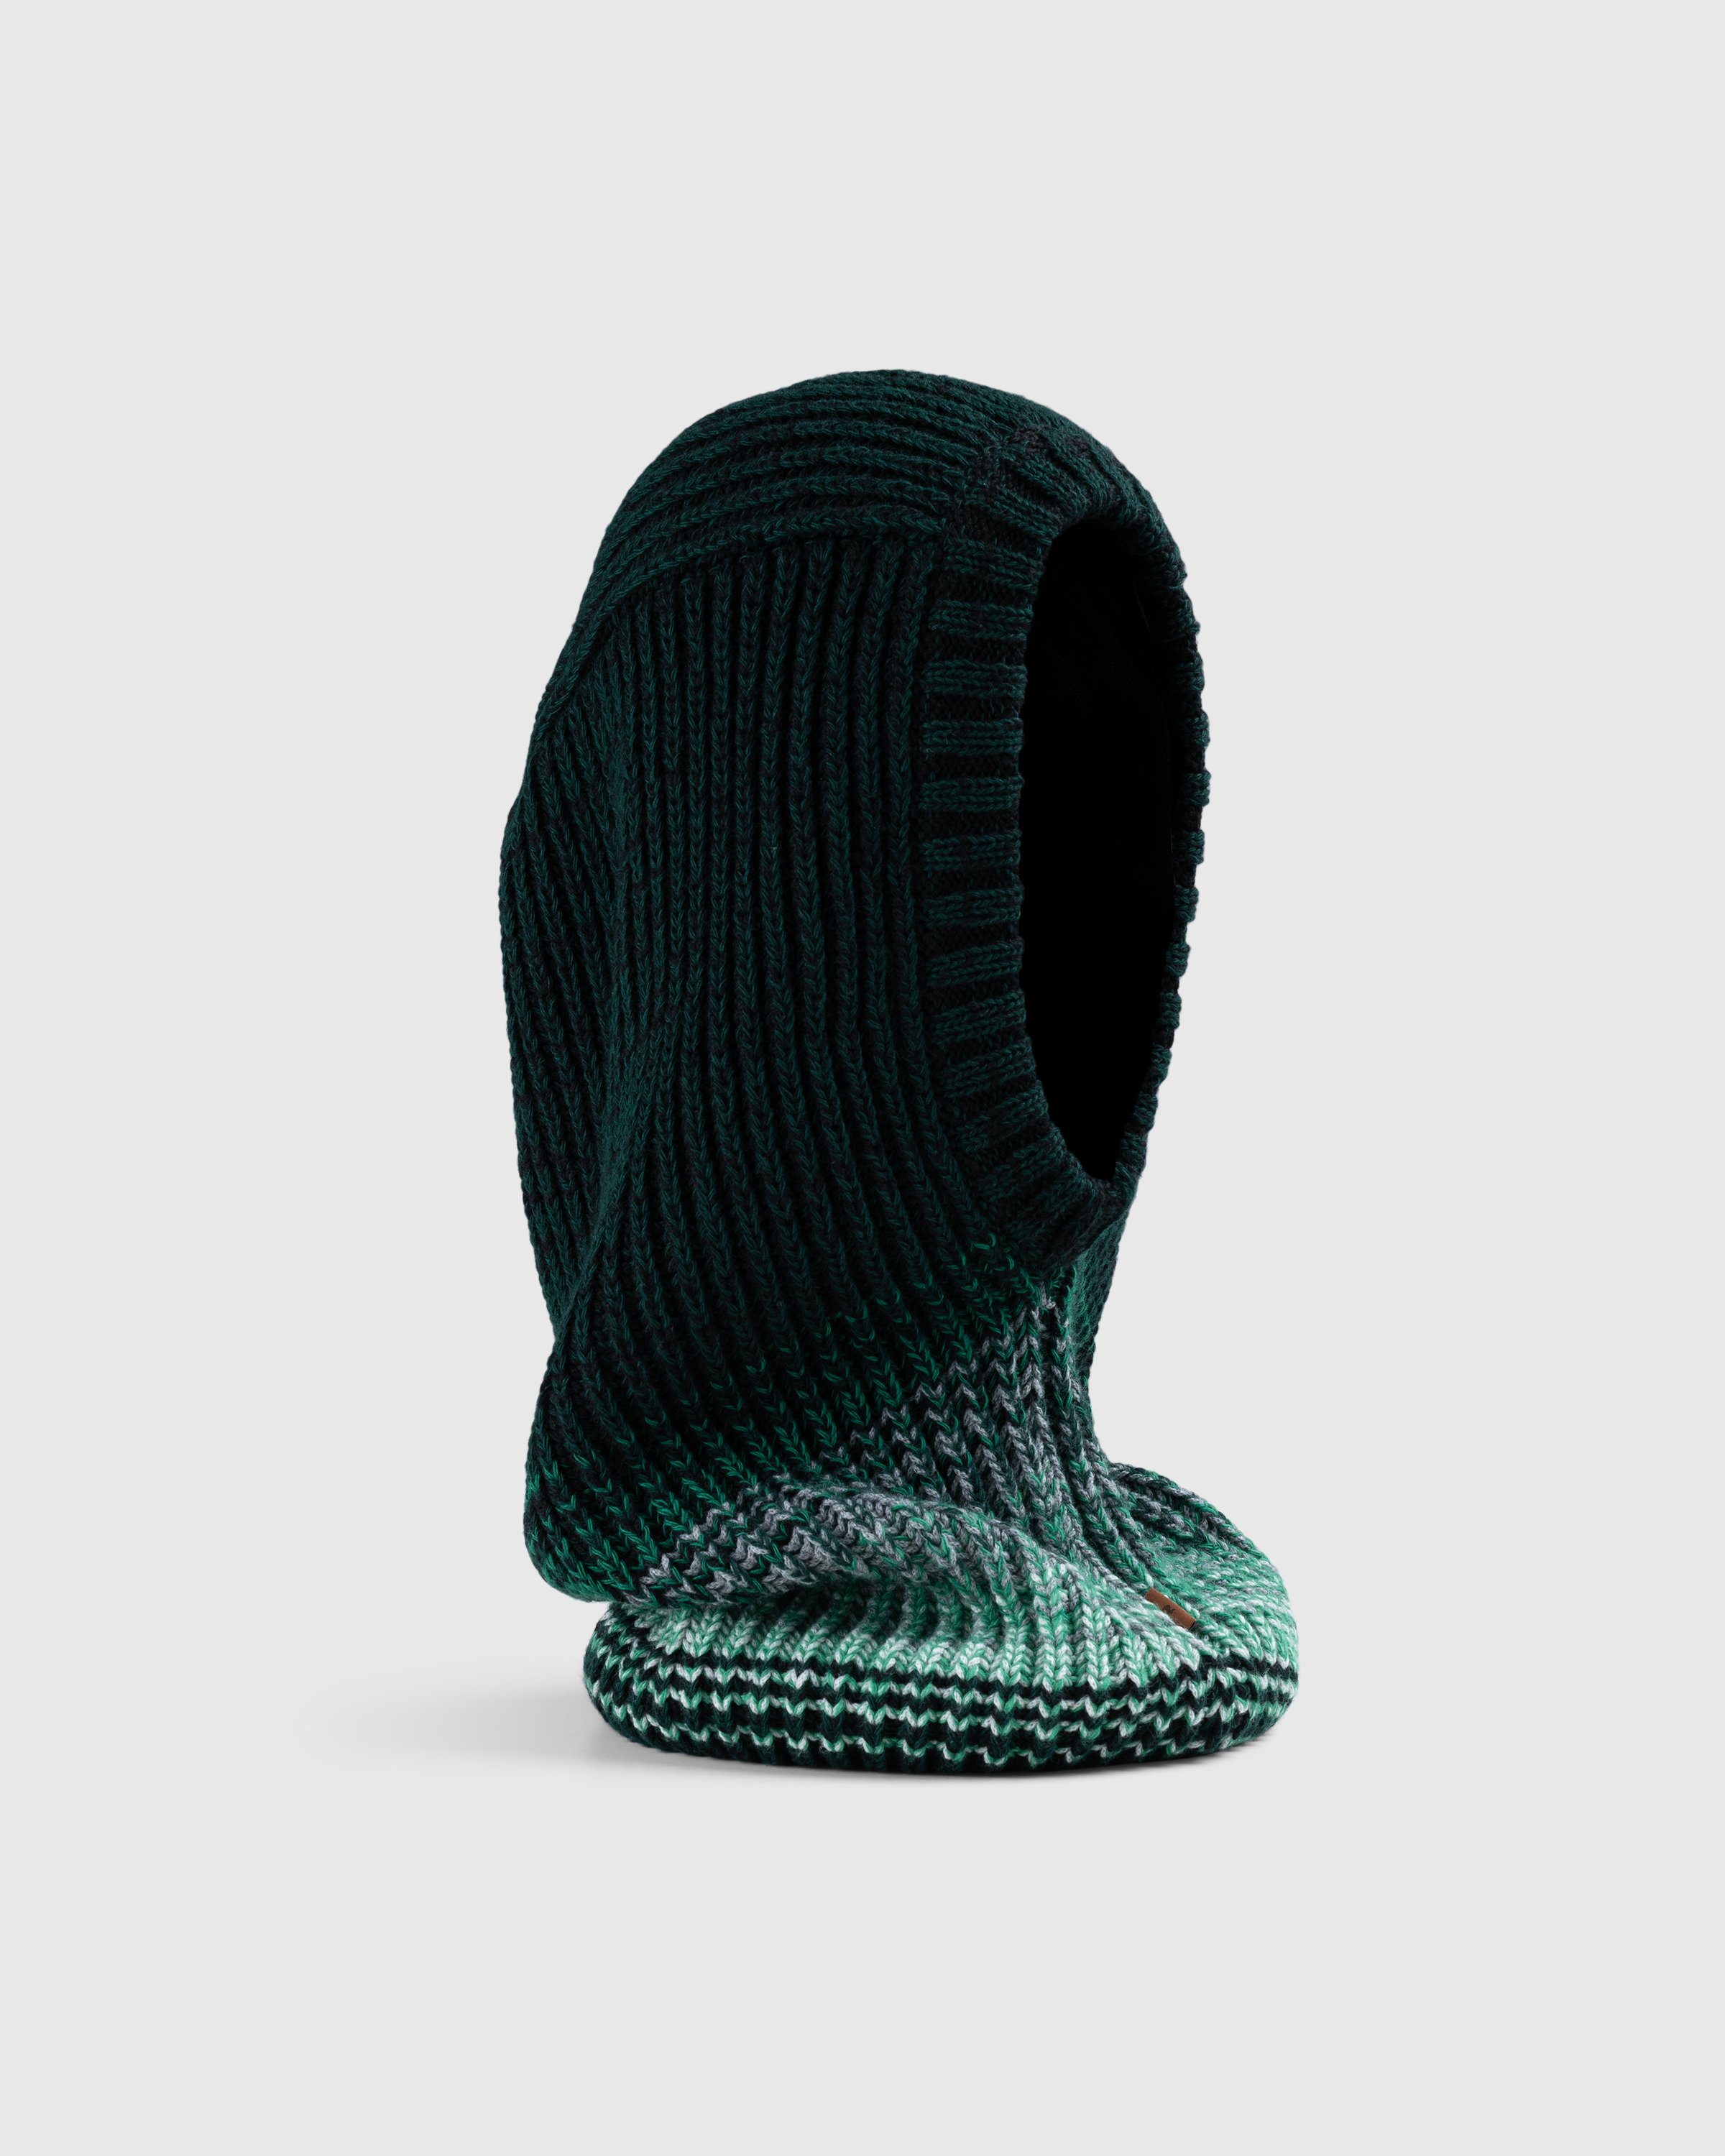 Missoni - Wool Balaclava Green/Black/White - Accessories - Multi - Image 2